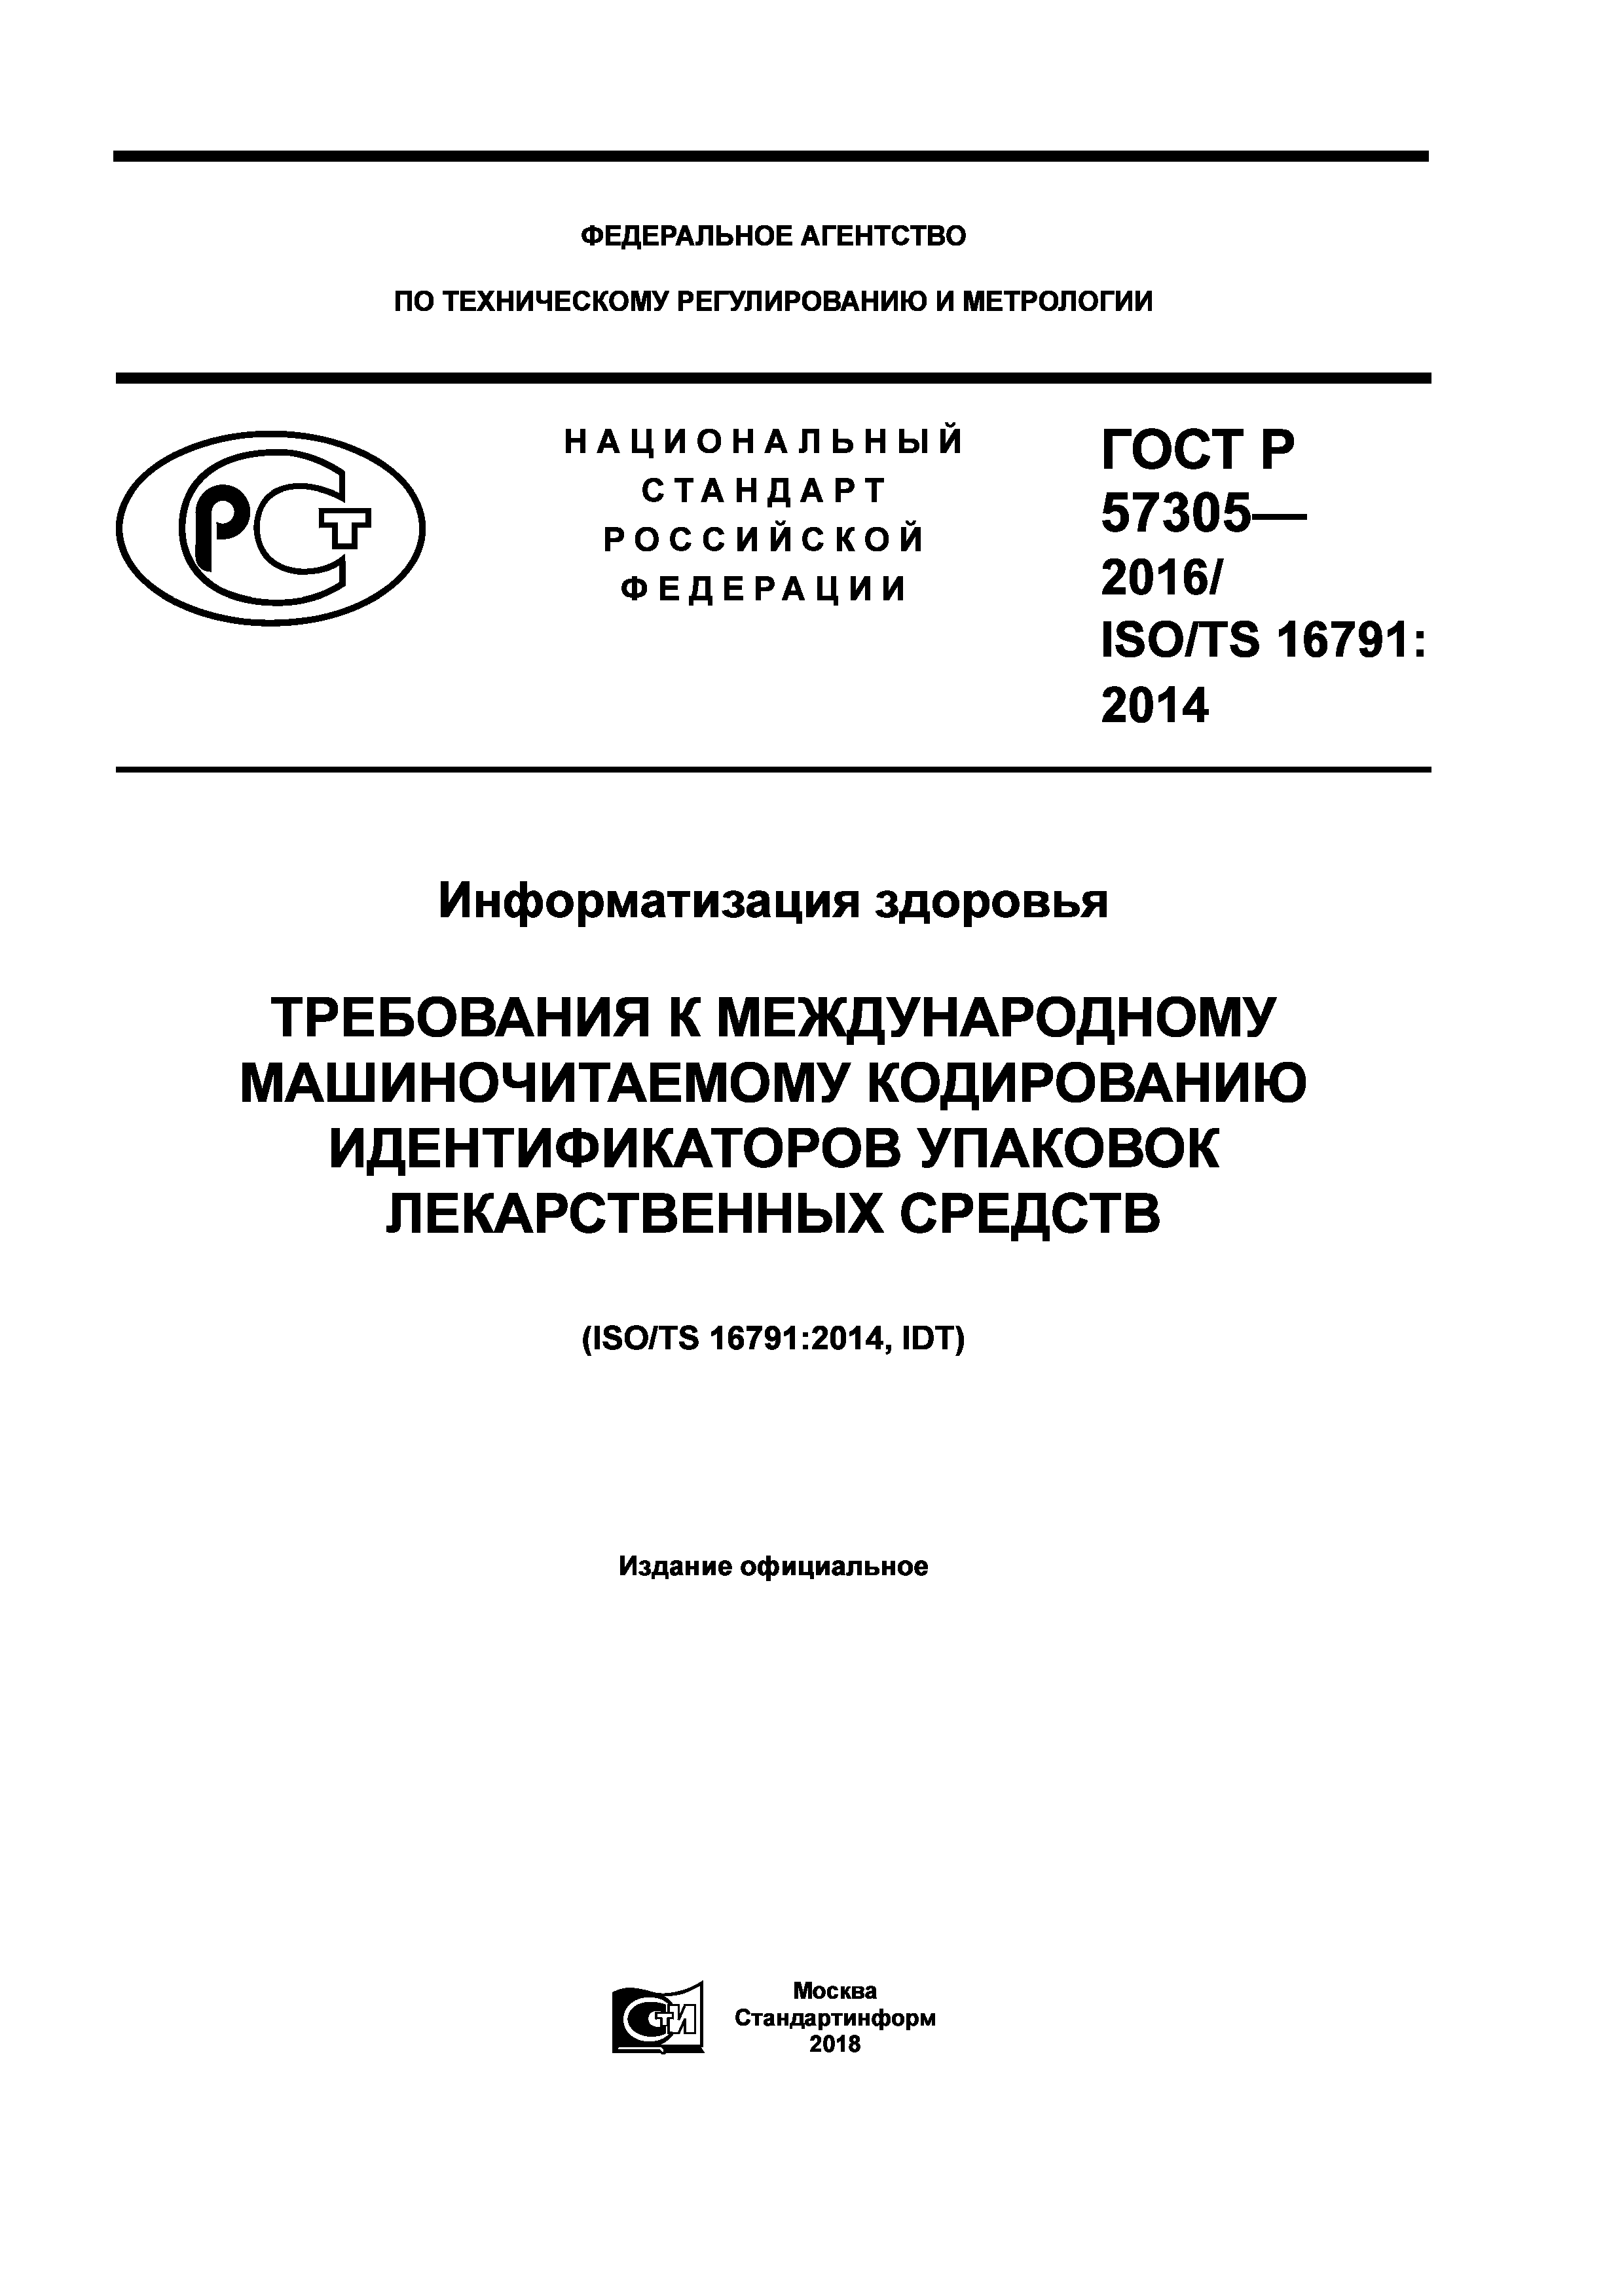 ГОСТ Р 57305-2016